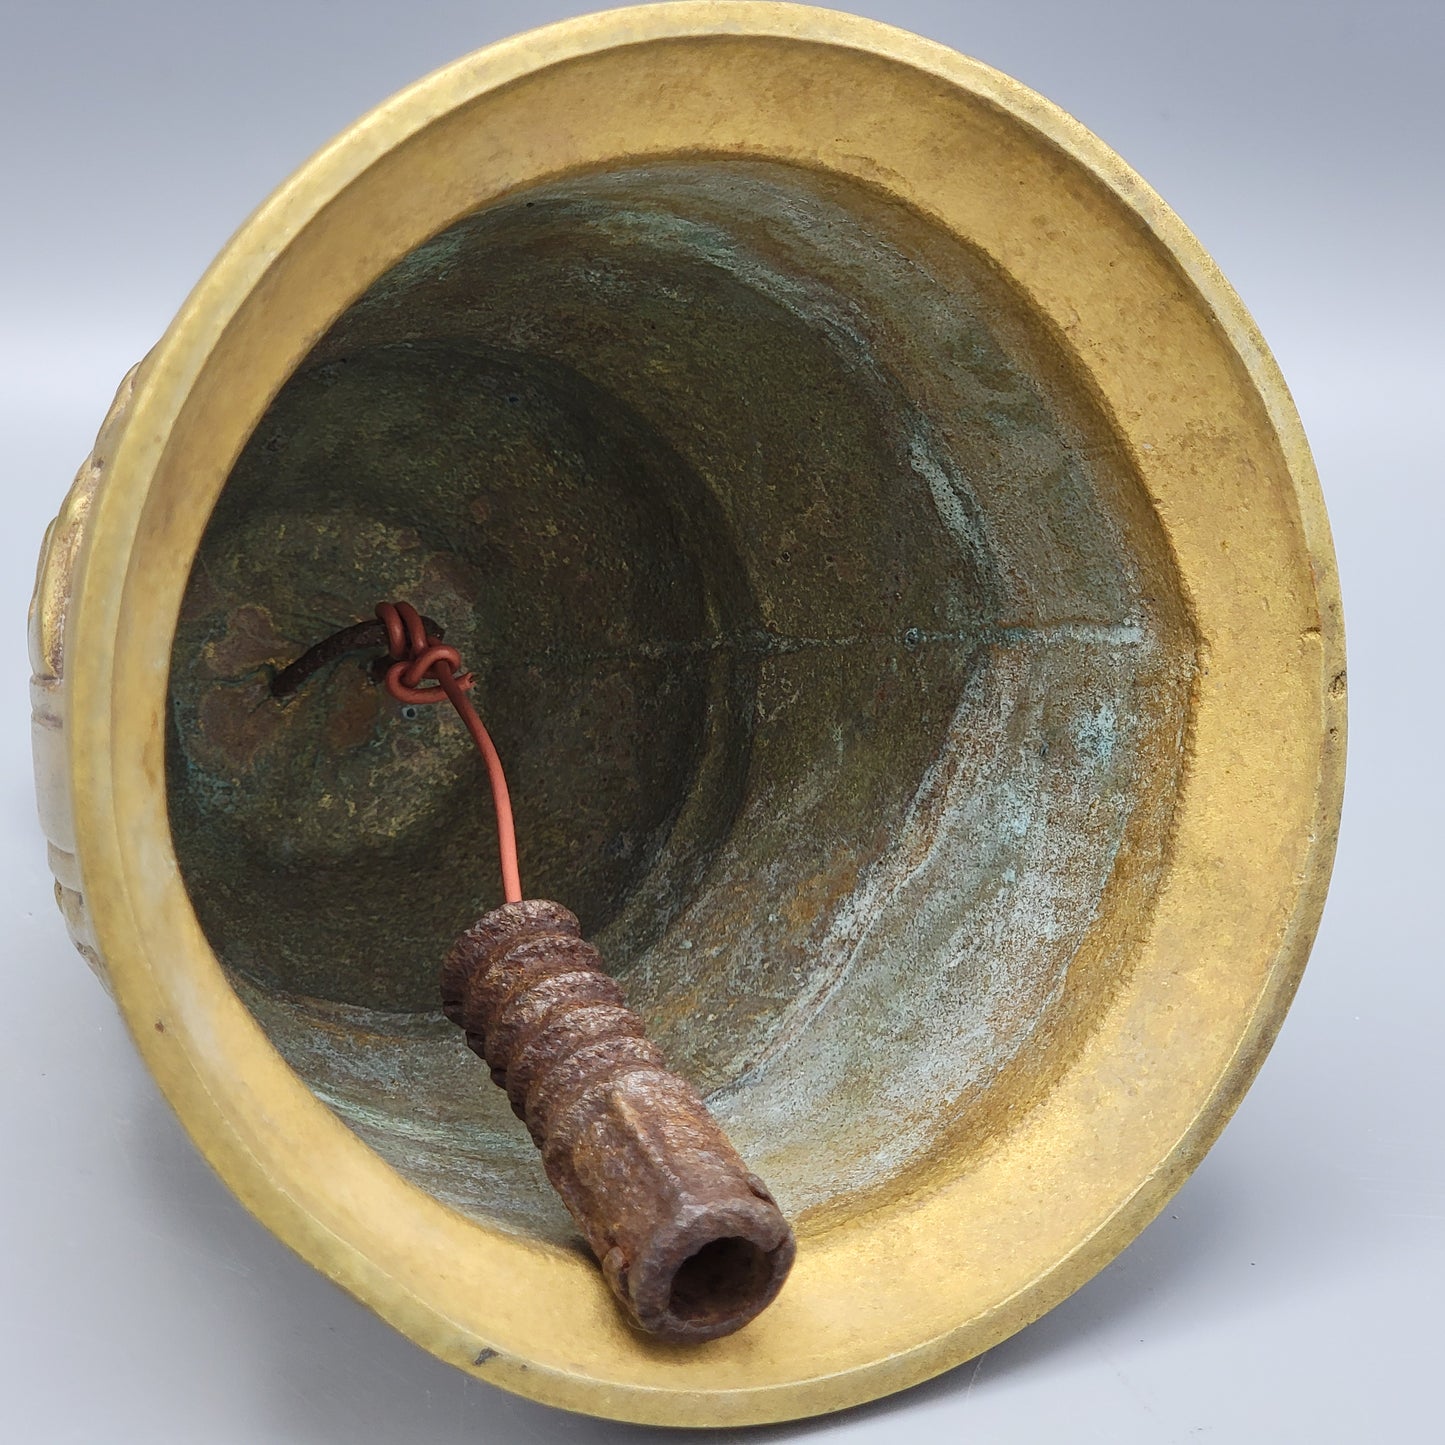 Mesopotamian Style Brass Bell